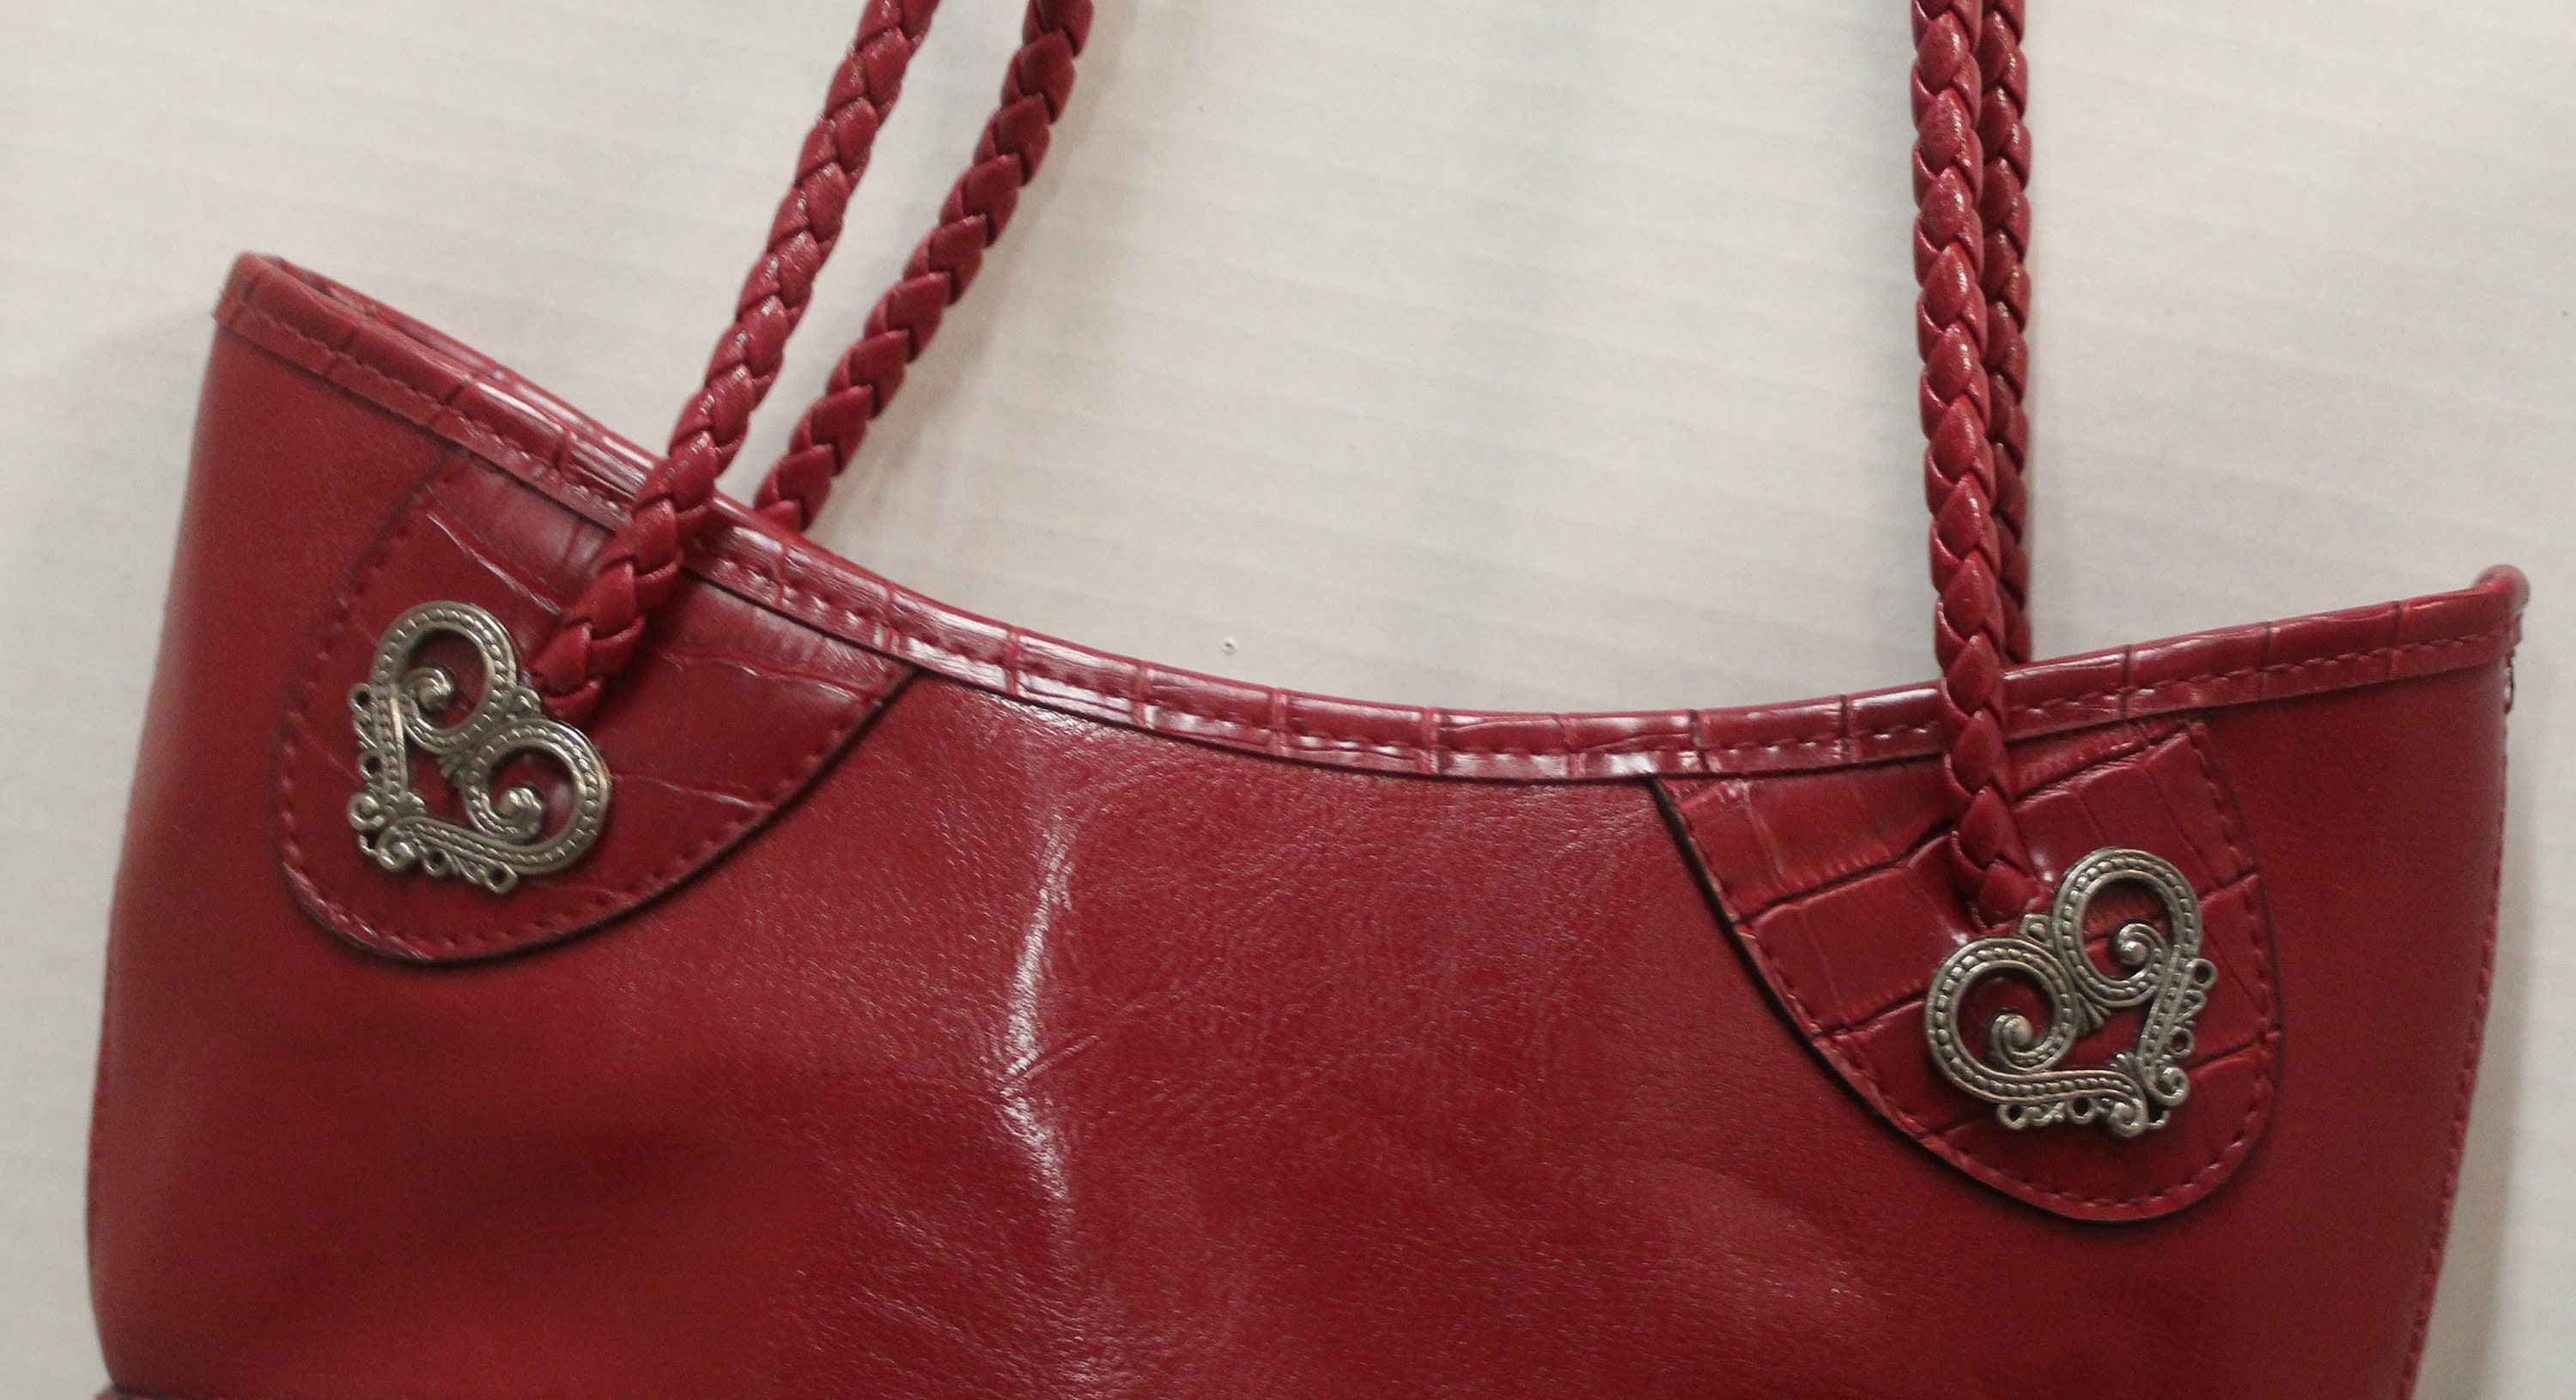 Brighton Red Suede Leather Braided Top Handle Handbag | eBay